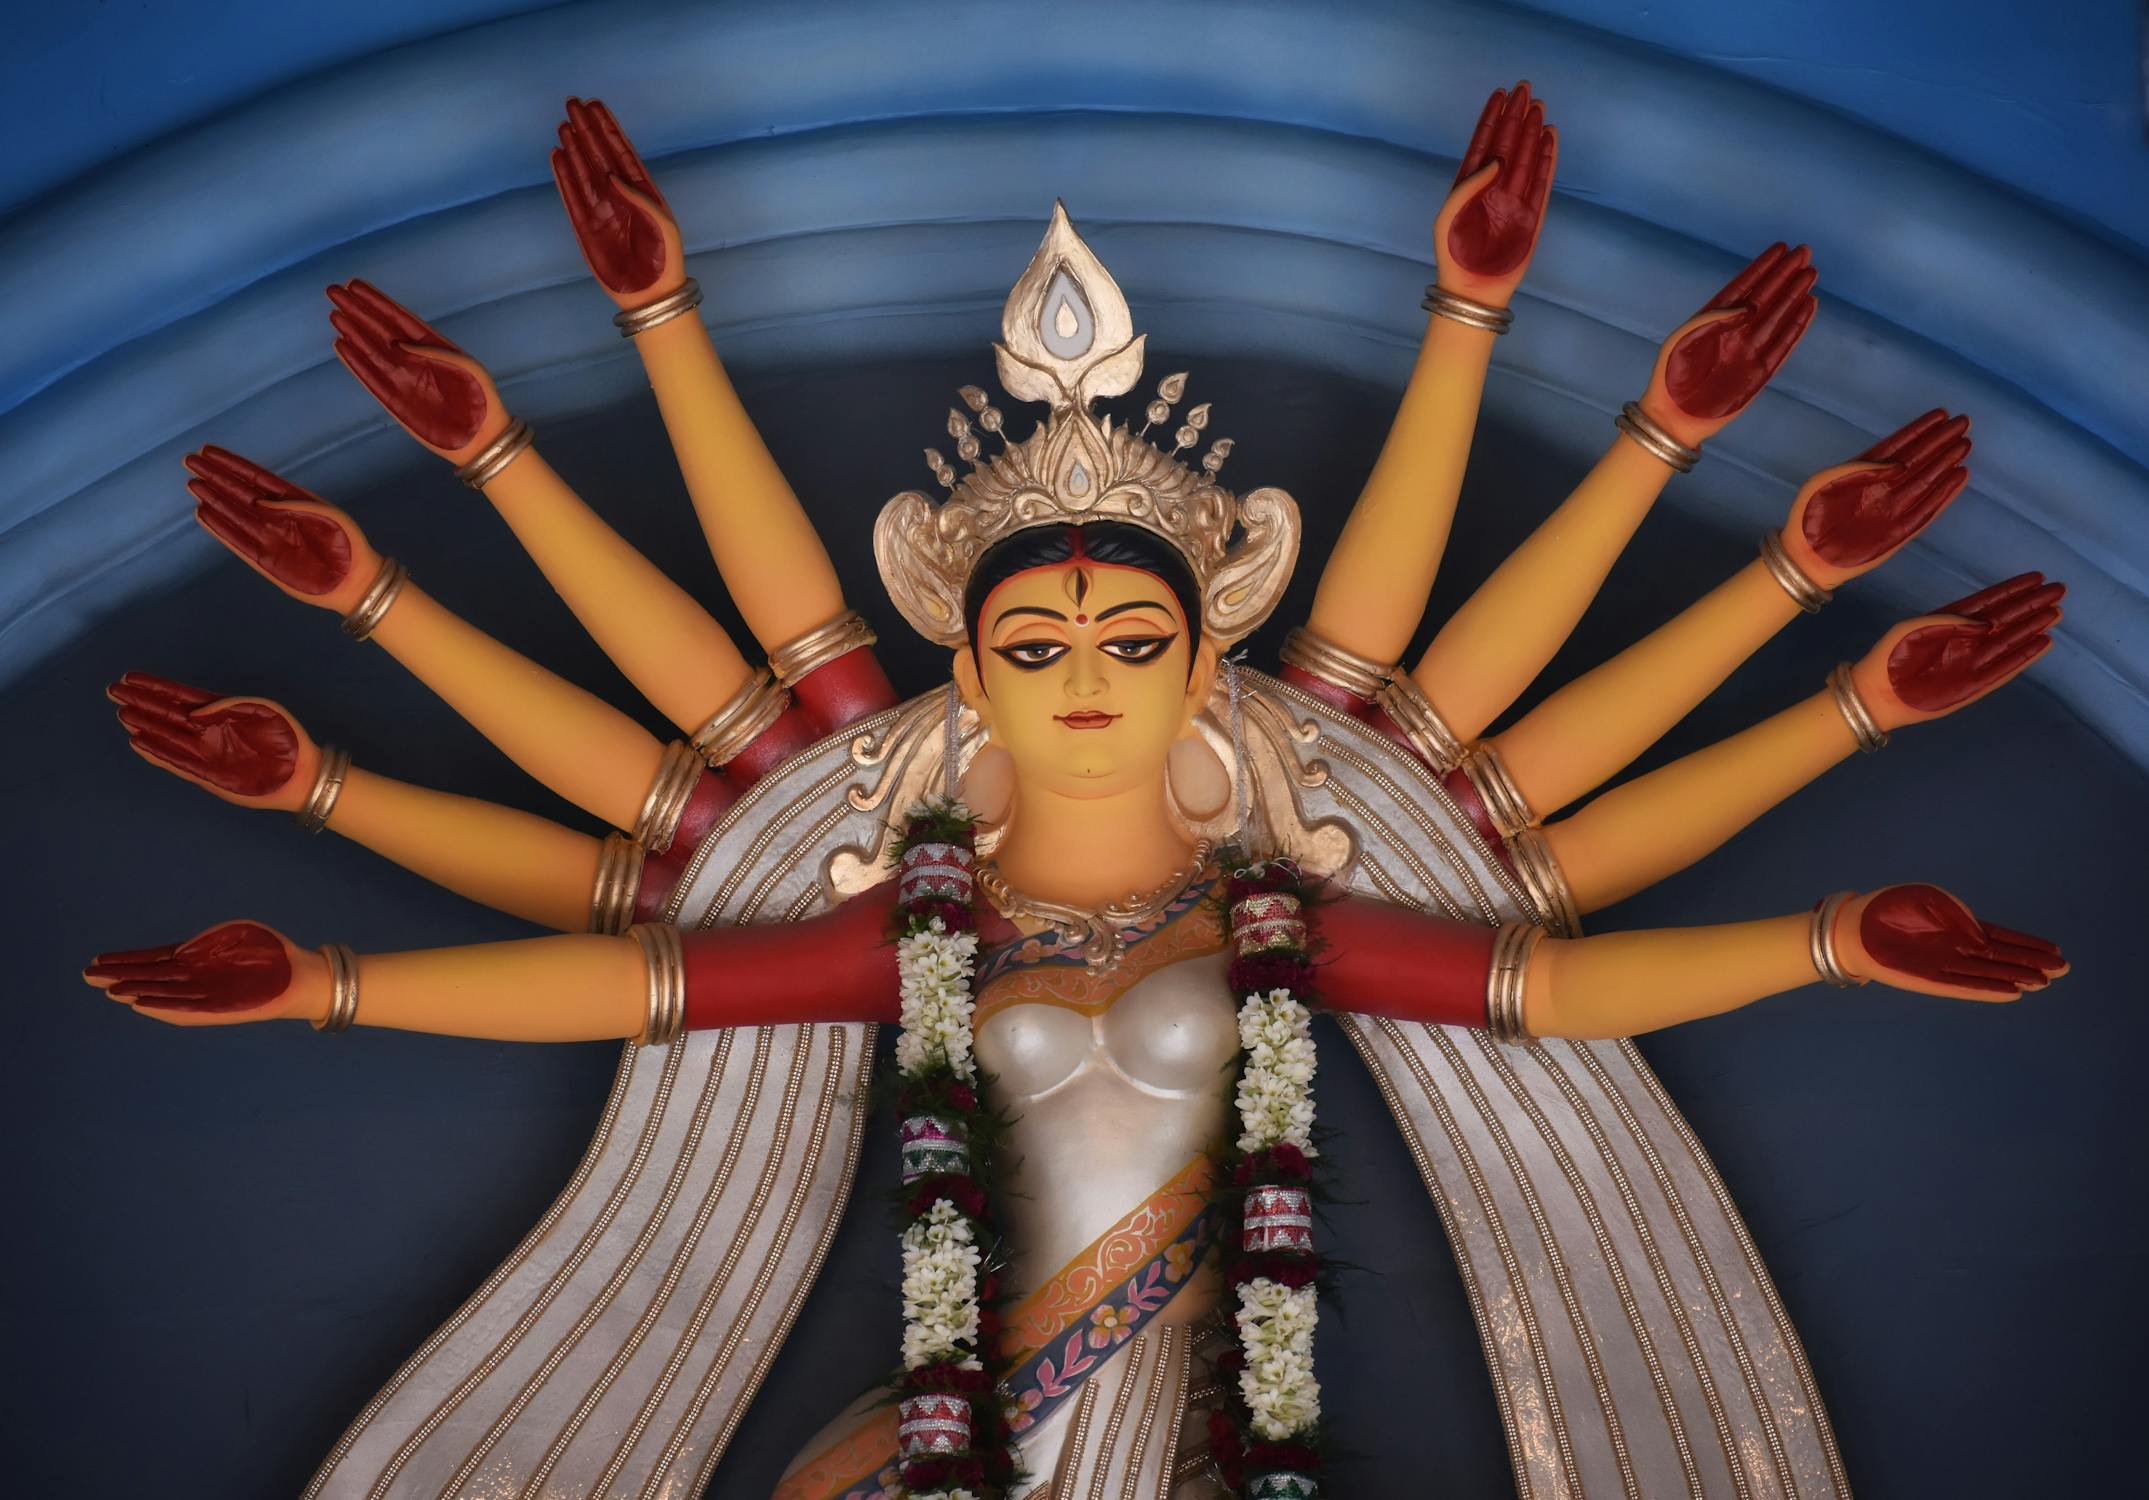 Woman power Maa Durga Photo by Debendra Das from Pexels: https://www.pexels.com/photo/durga-figurine-5870157/